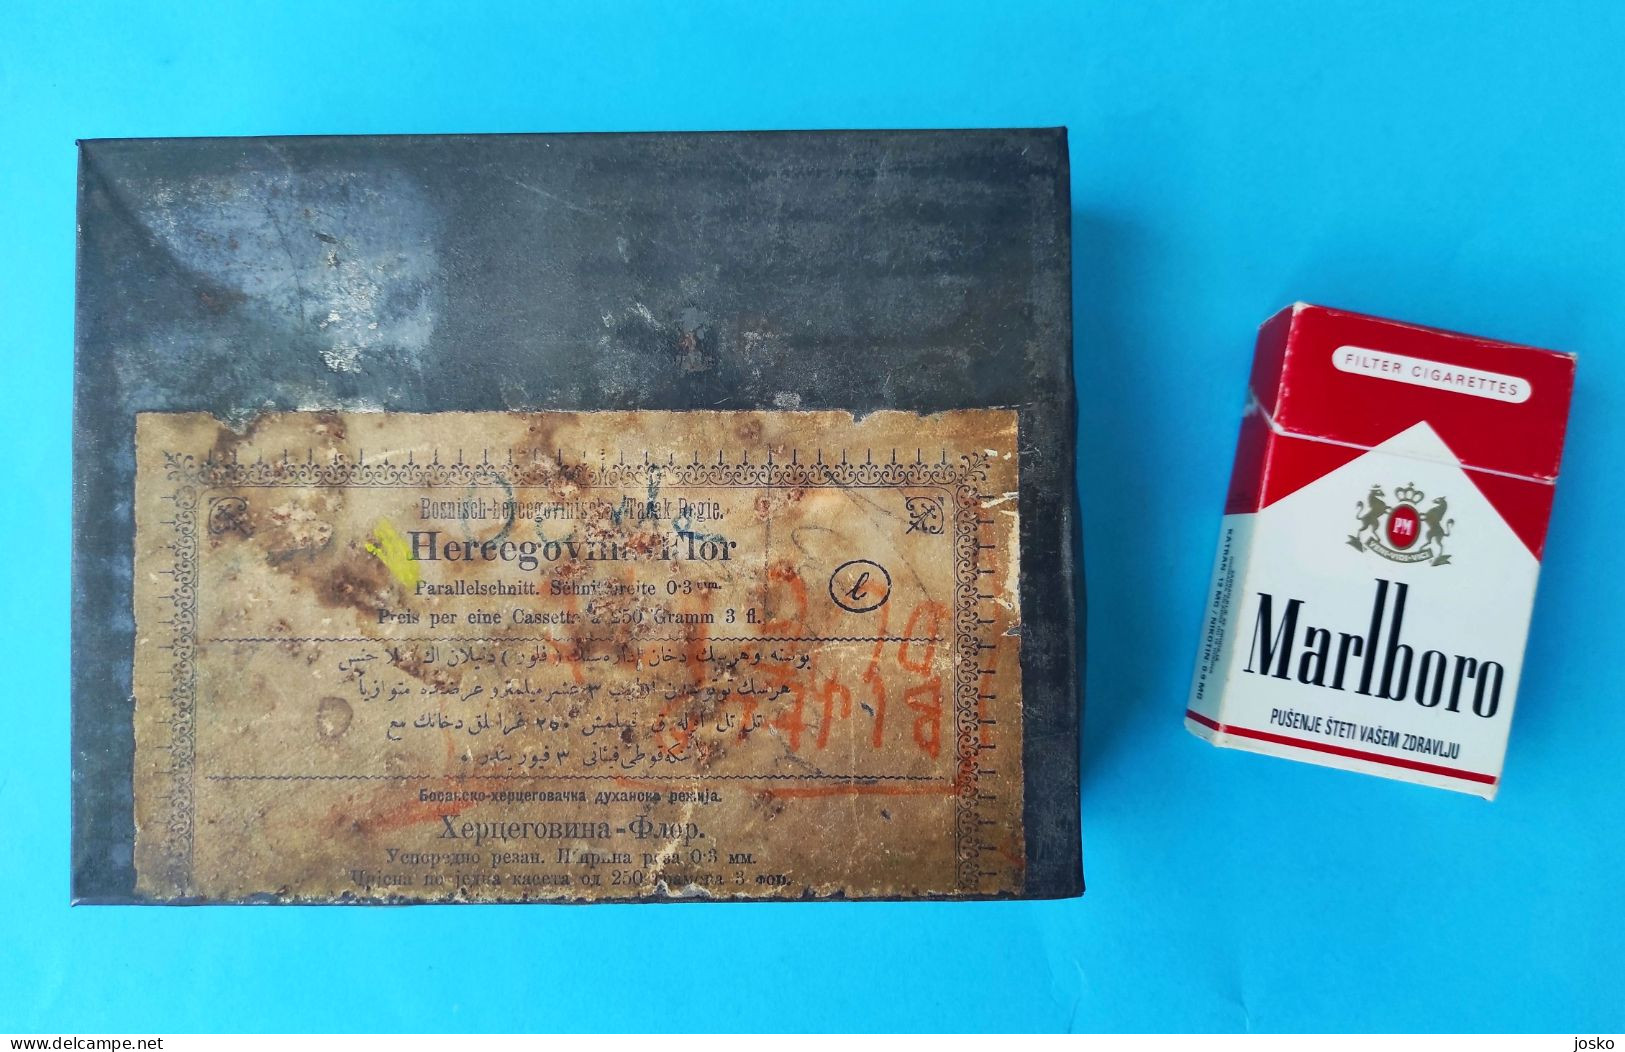 HERCEGOVINA FLOR - Bosnia And Herzegovina Antique Tobacco Tin Box (1883.y.) * Tabak Tabac Tabacco Tabaco Cigarettes - Boites à Tabac Vides